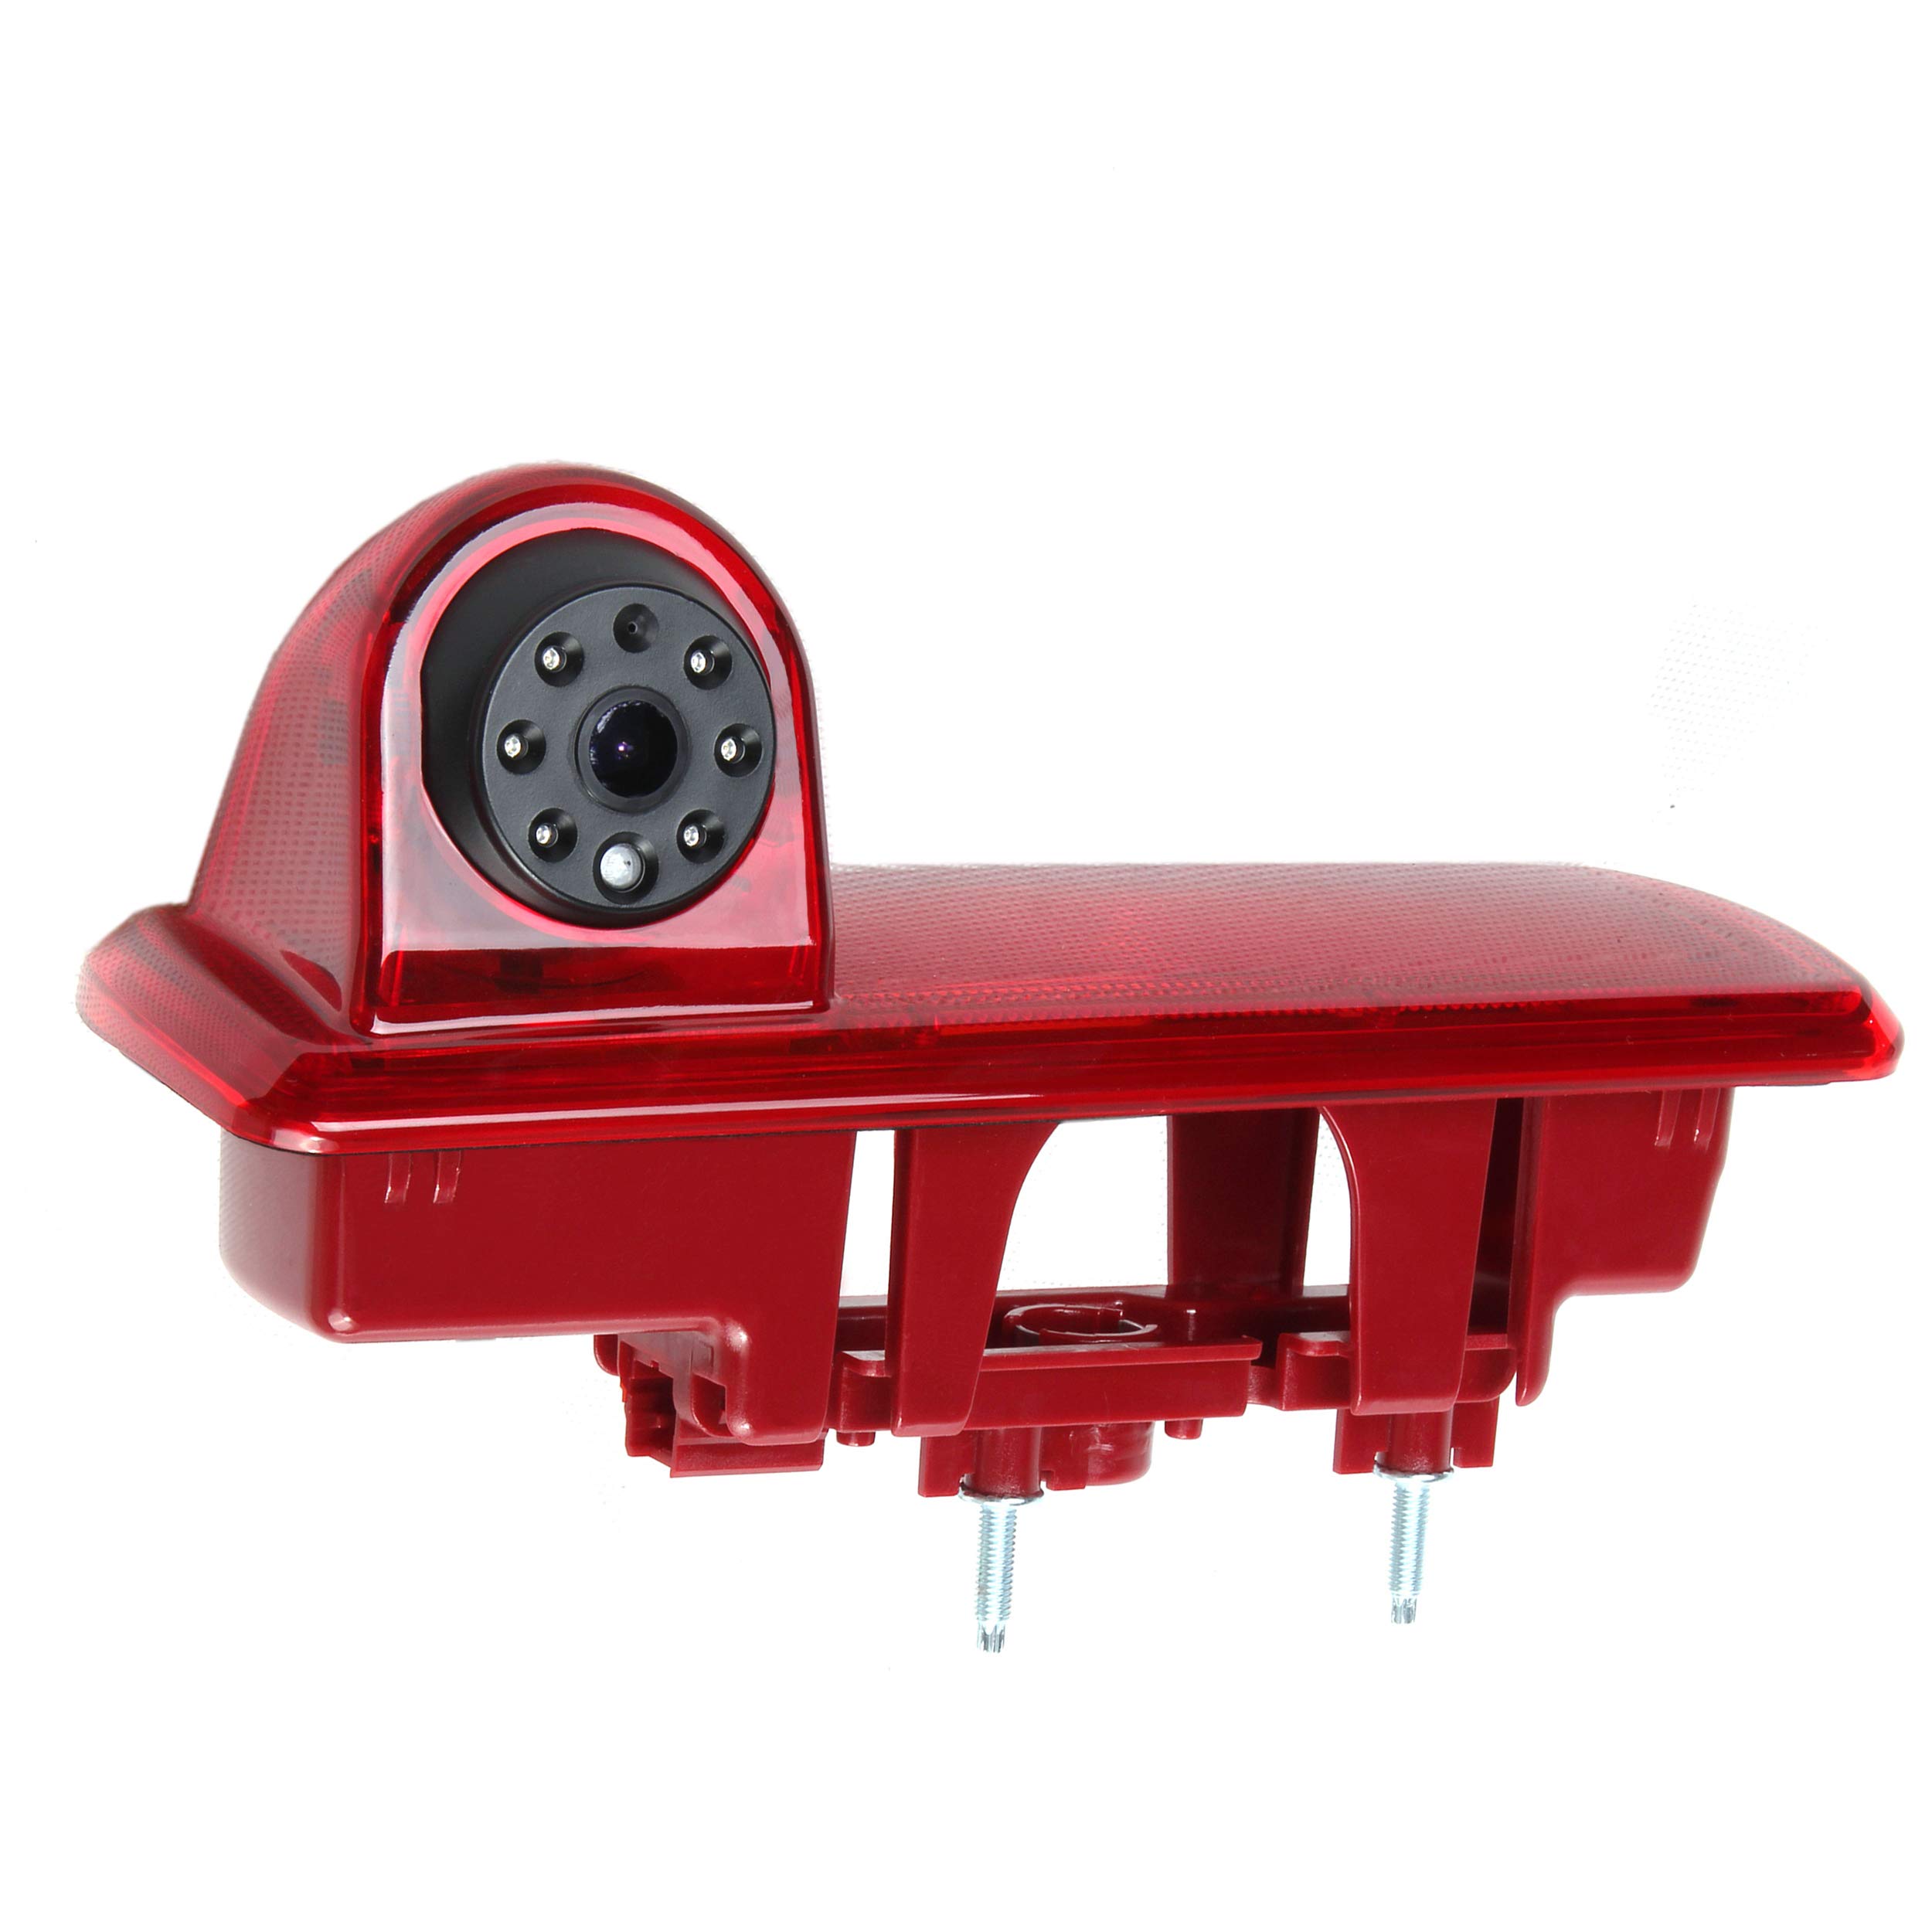 RED WOLF Auto Rückfahrkamera Bremslicht Kamera für Vauxhall Vivaro Opel Vivaro Renault Trafic ab 2014 NTSC IP68 Wasserdicht Nachtsicht 12V Auto Einparkhilfe Kamera